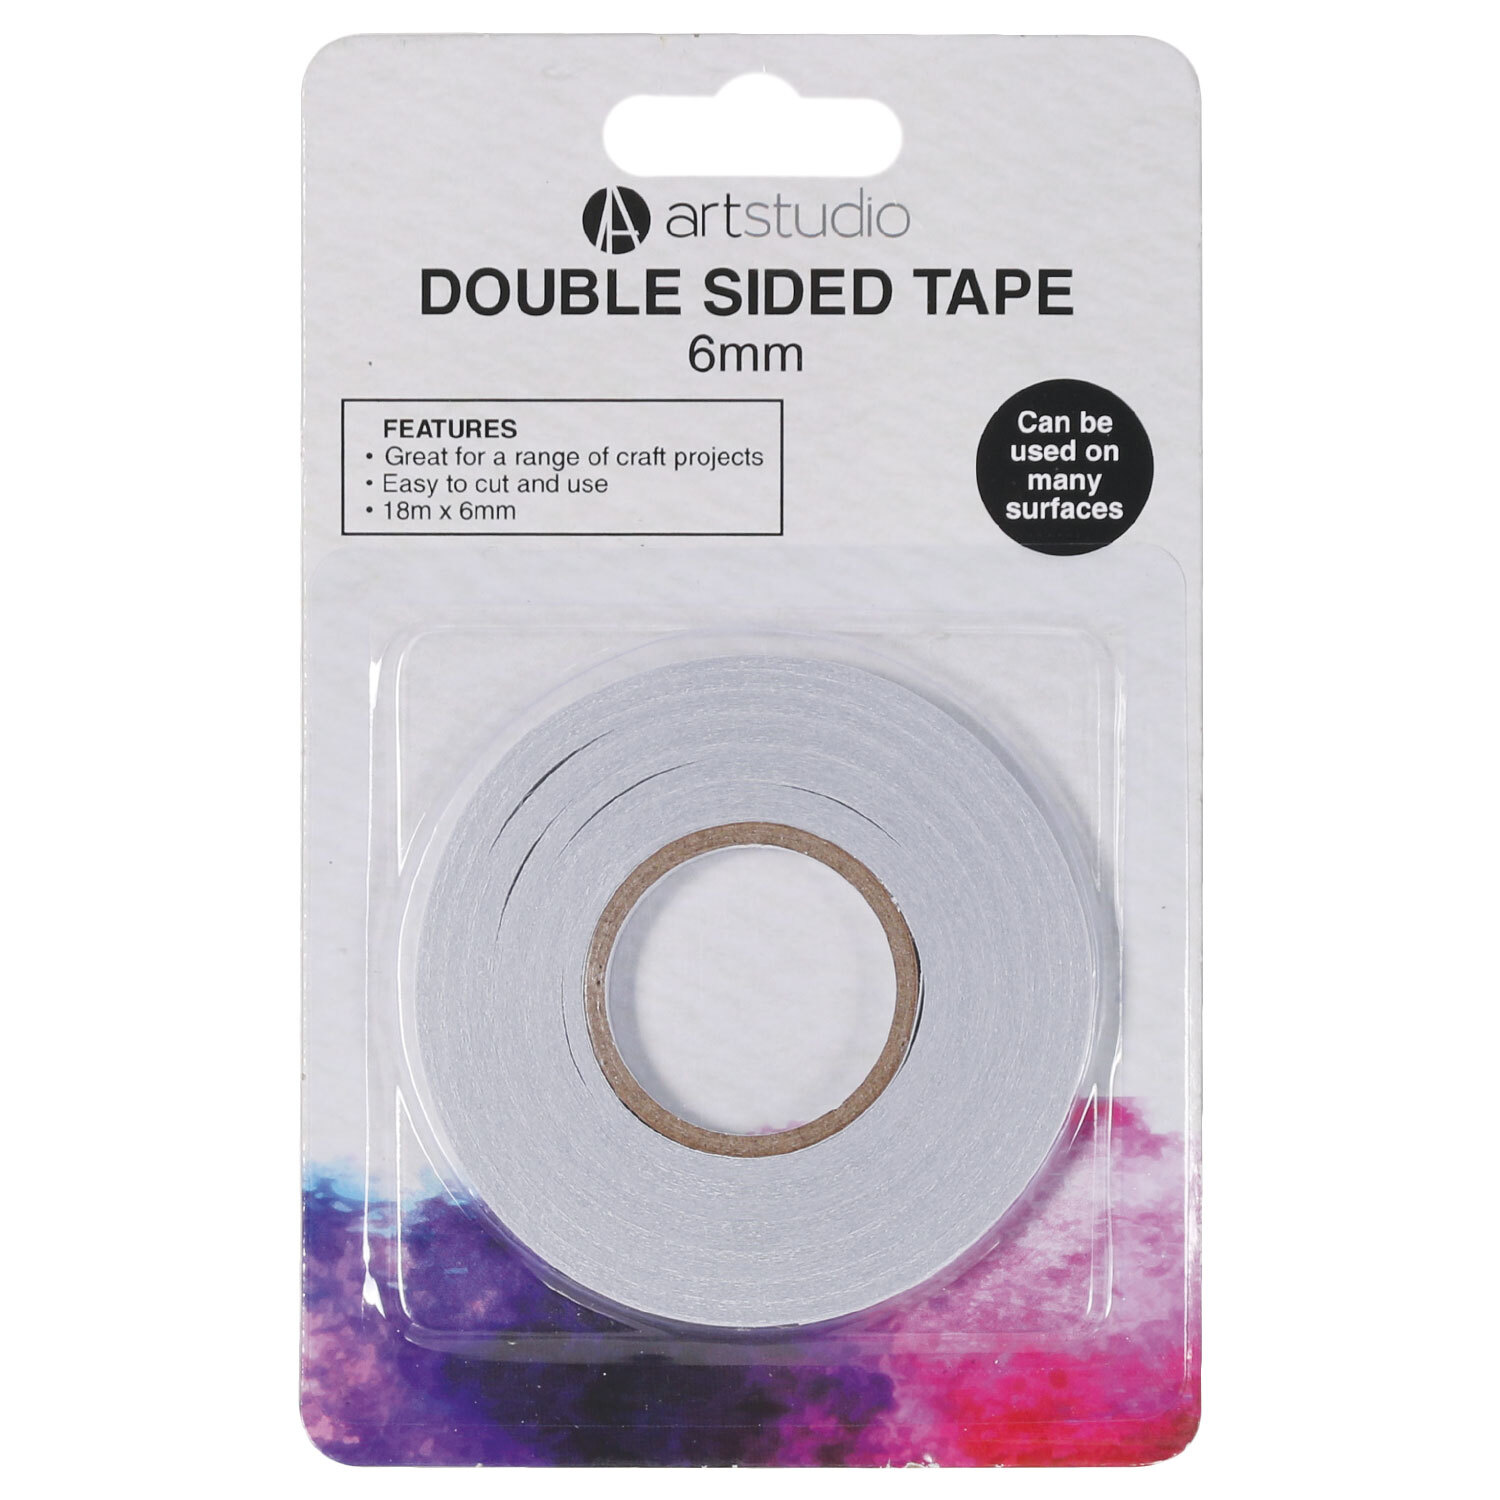 Art Studio Double Sided Tape - 6mm Image